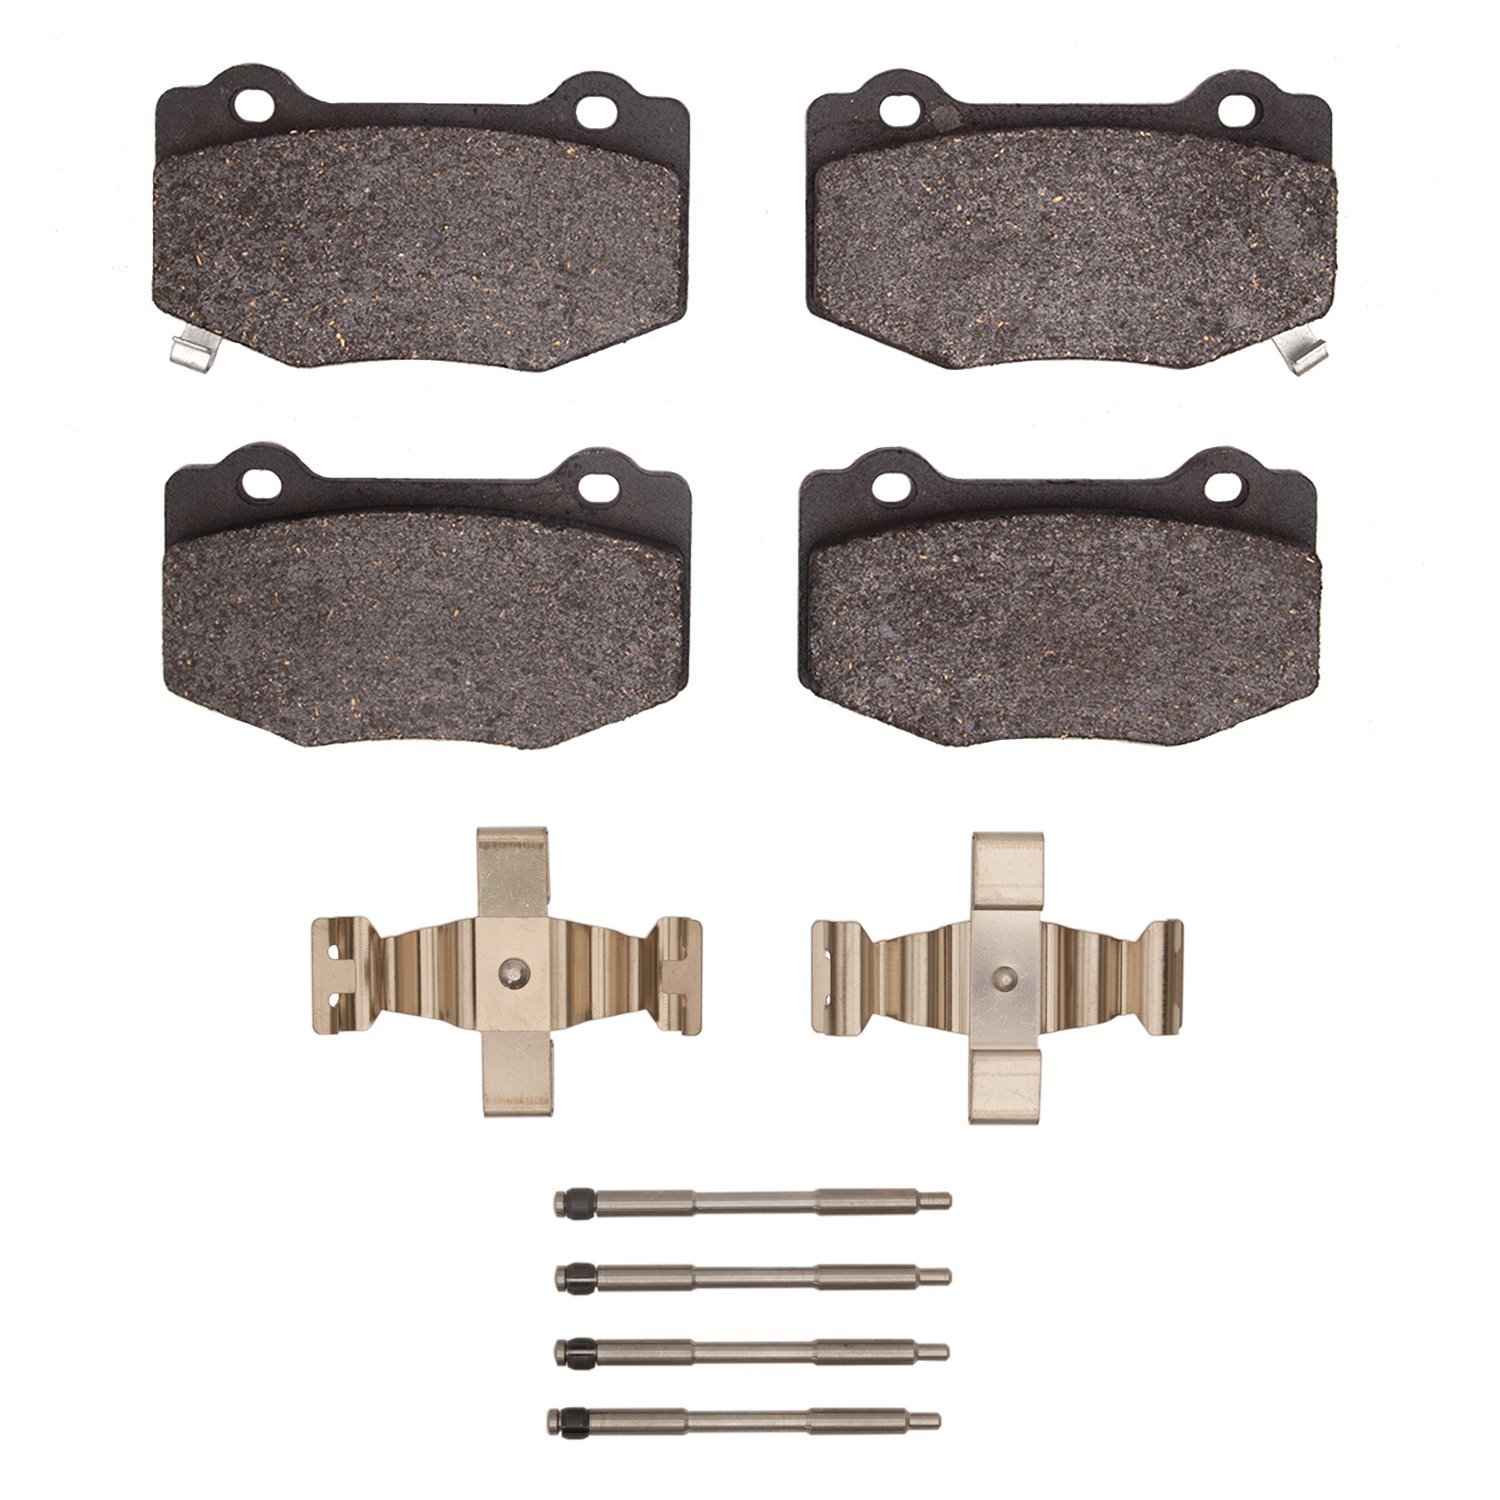 1552-1718-01 5000 Advanced Low-Metallic Brake Pads & Hardware Kit, Fits Select GM, Position: Rear